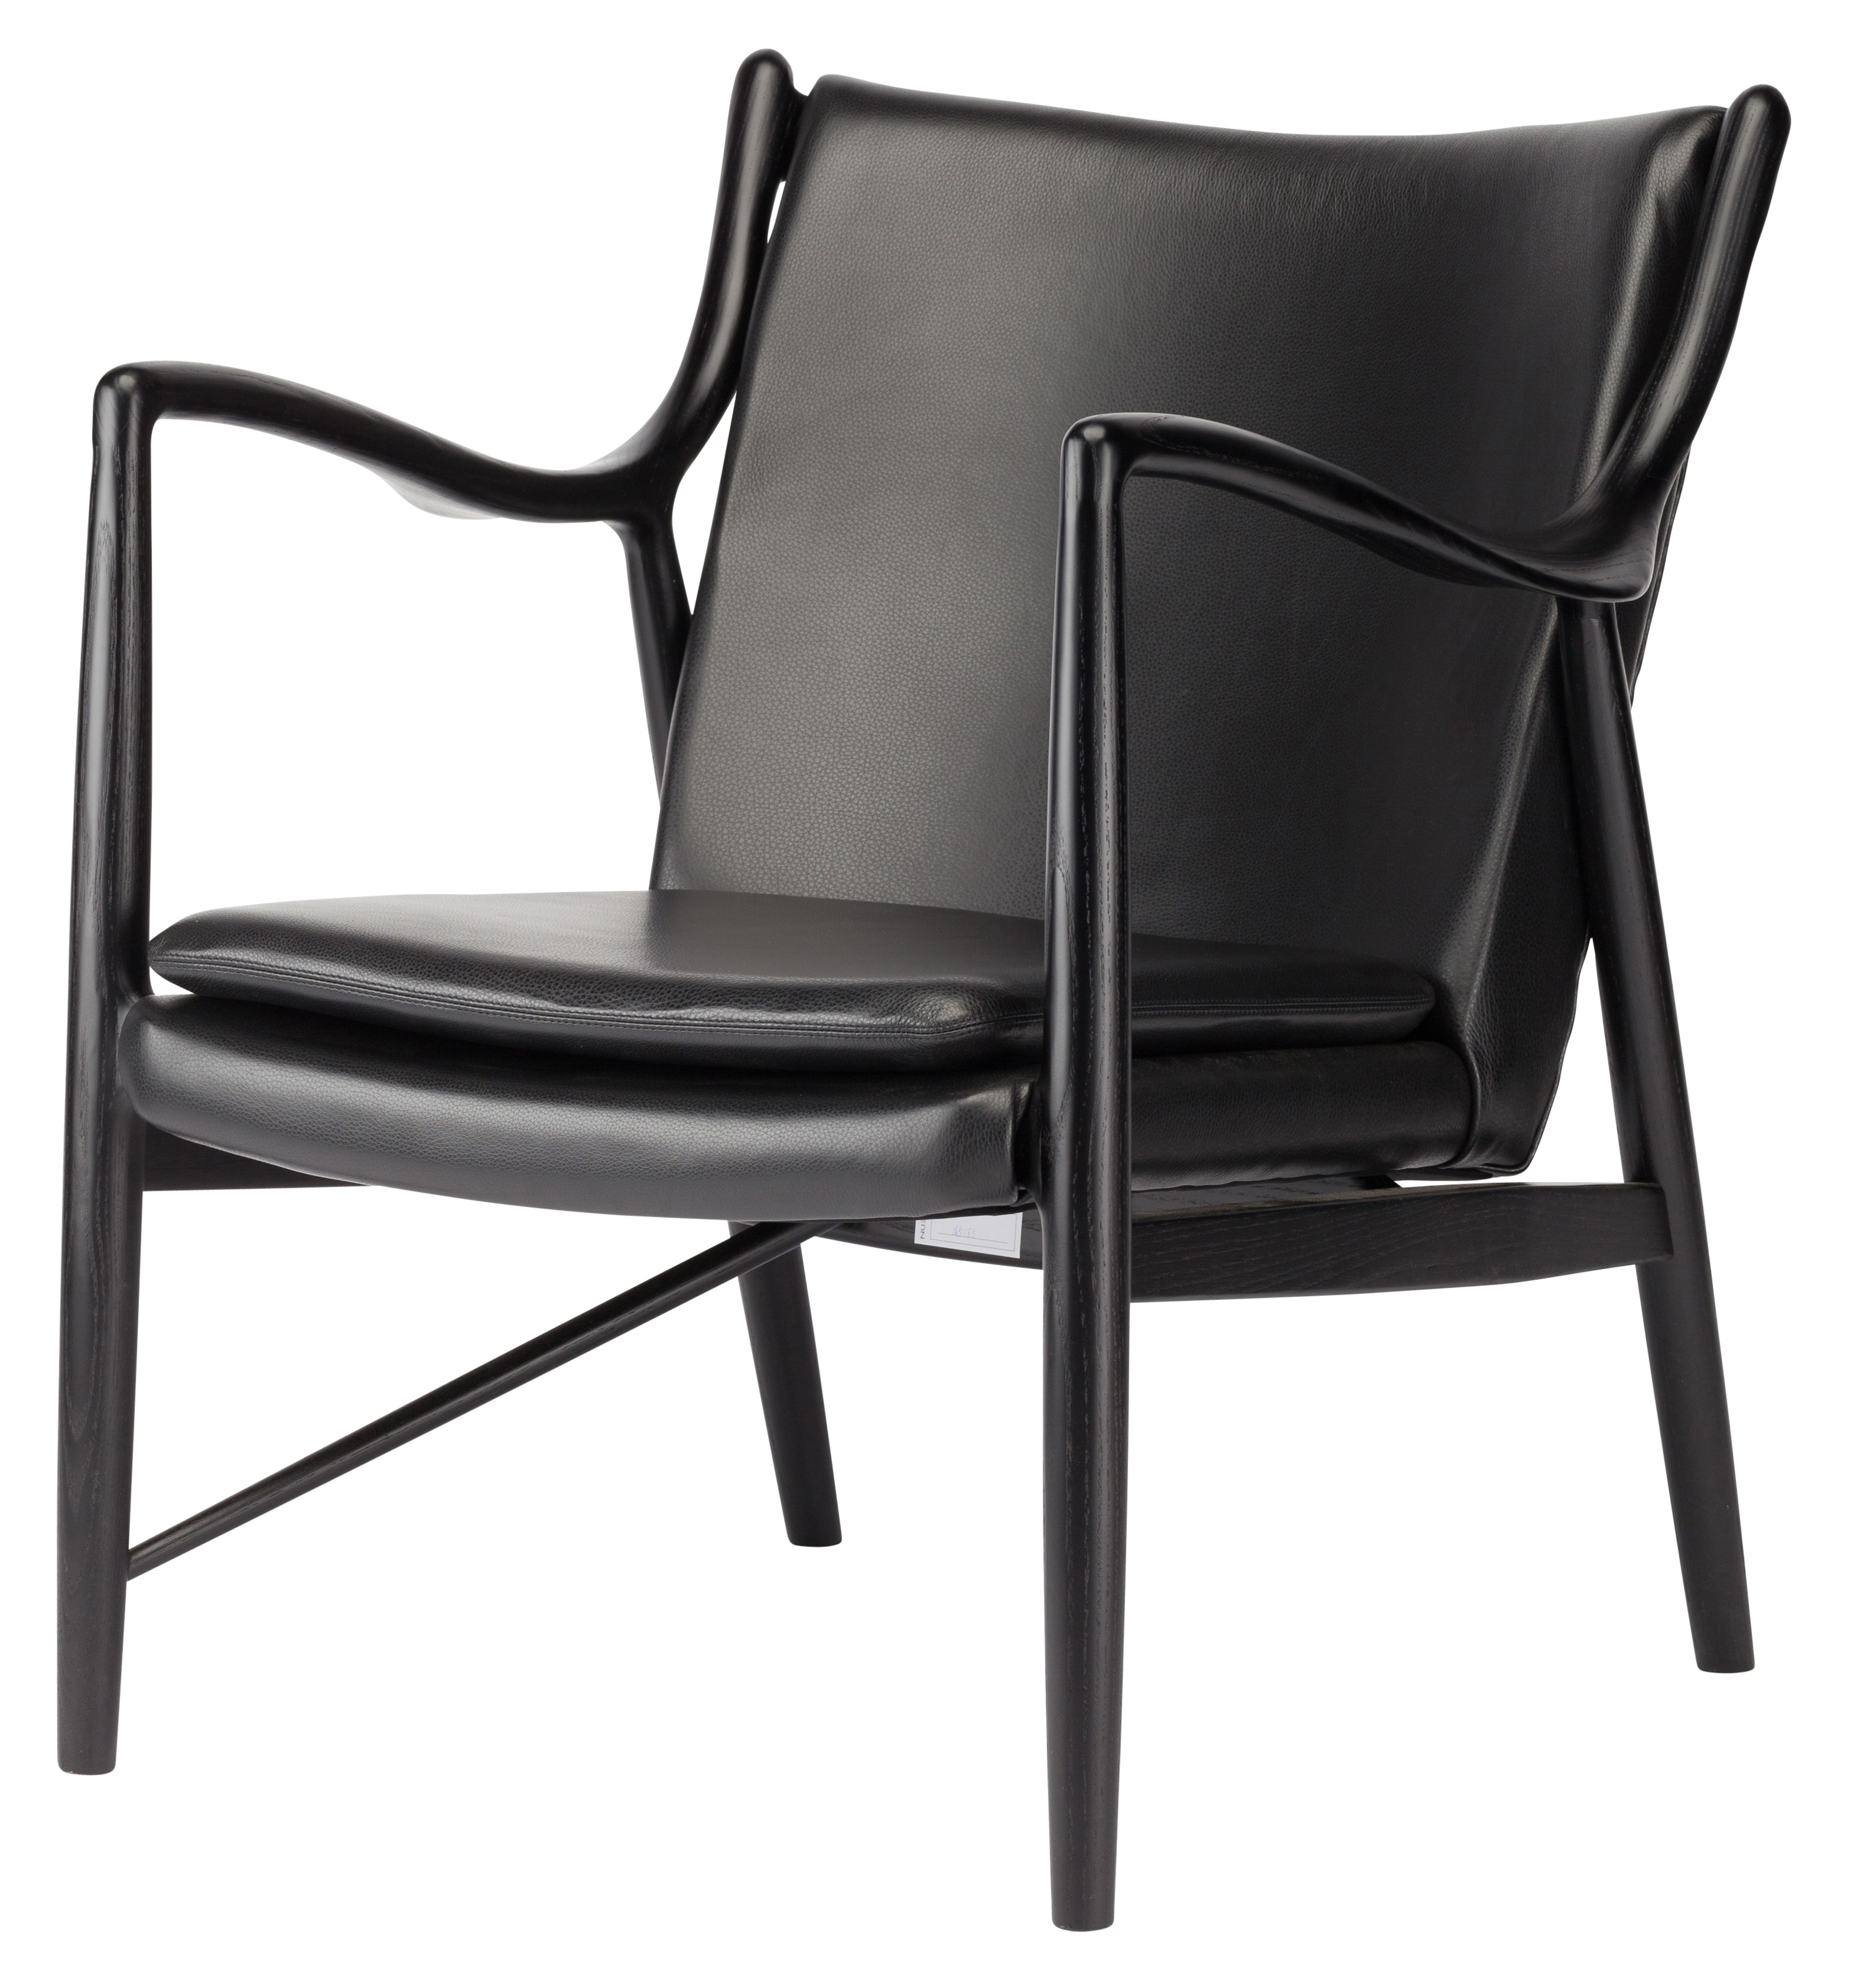 Viz Chair black - Image 0